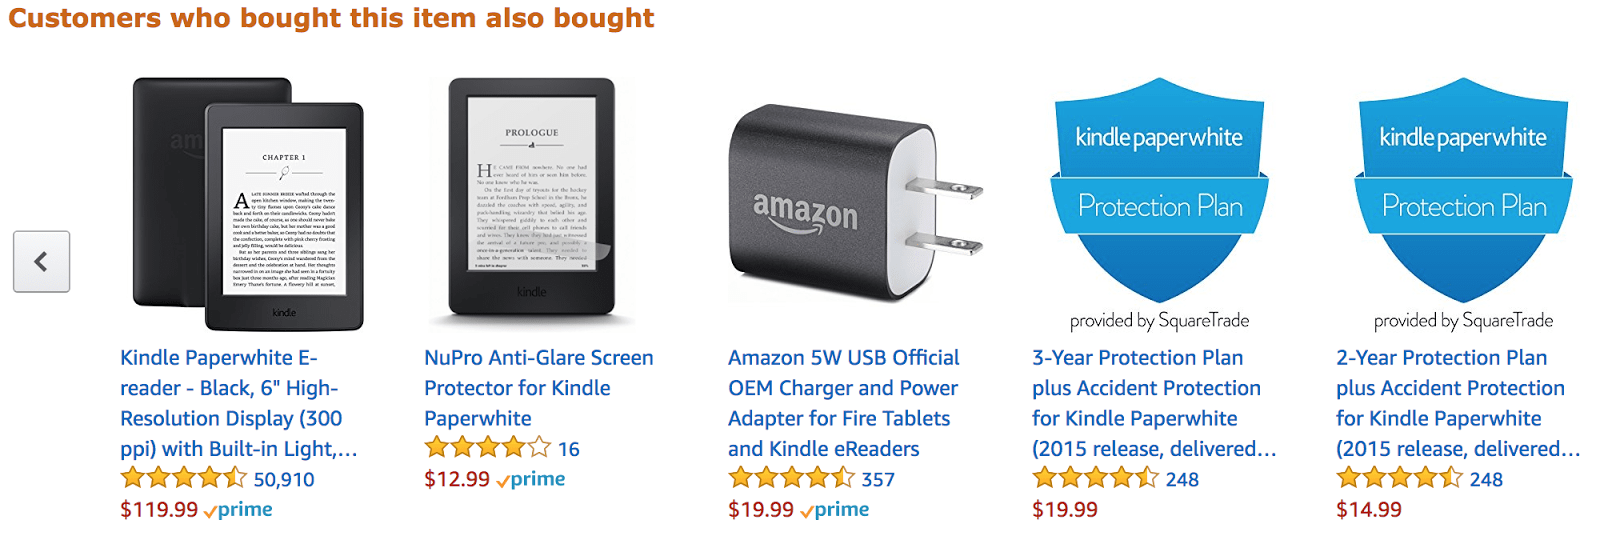 Amazon upselling and cross-selling